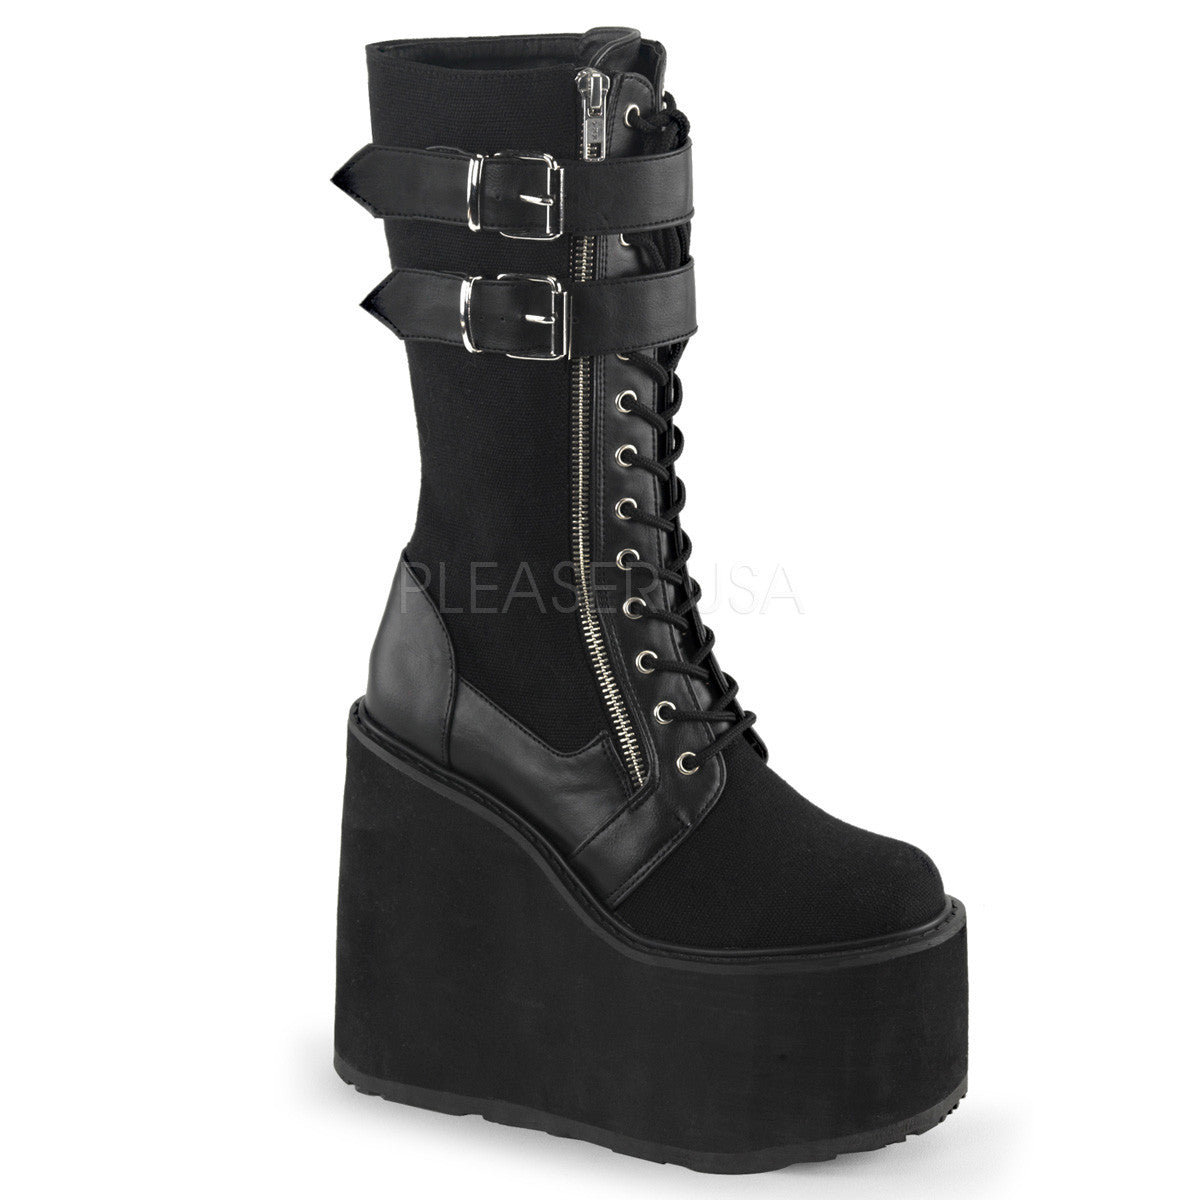 Demonia SWING-221 Black Canvas-Vegan Leather Boots - Shoecup.com - 1